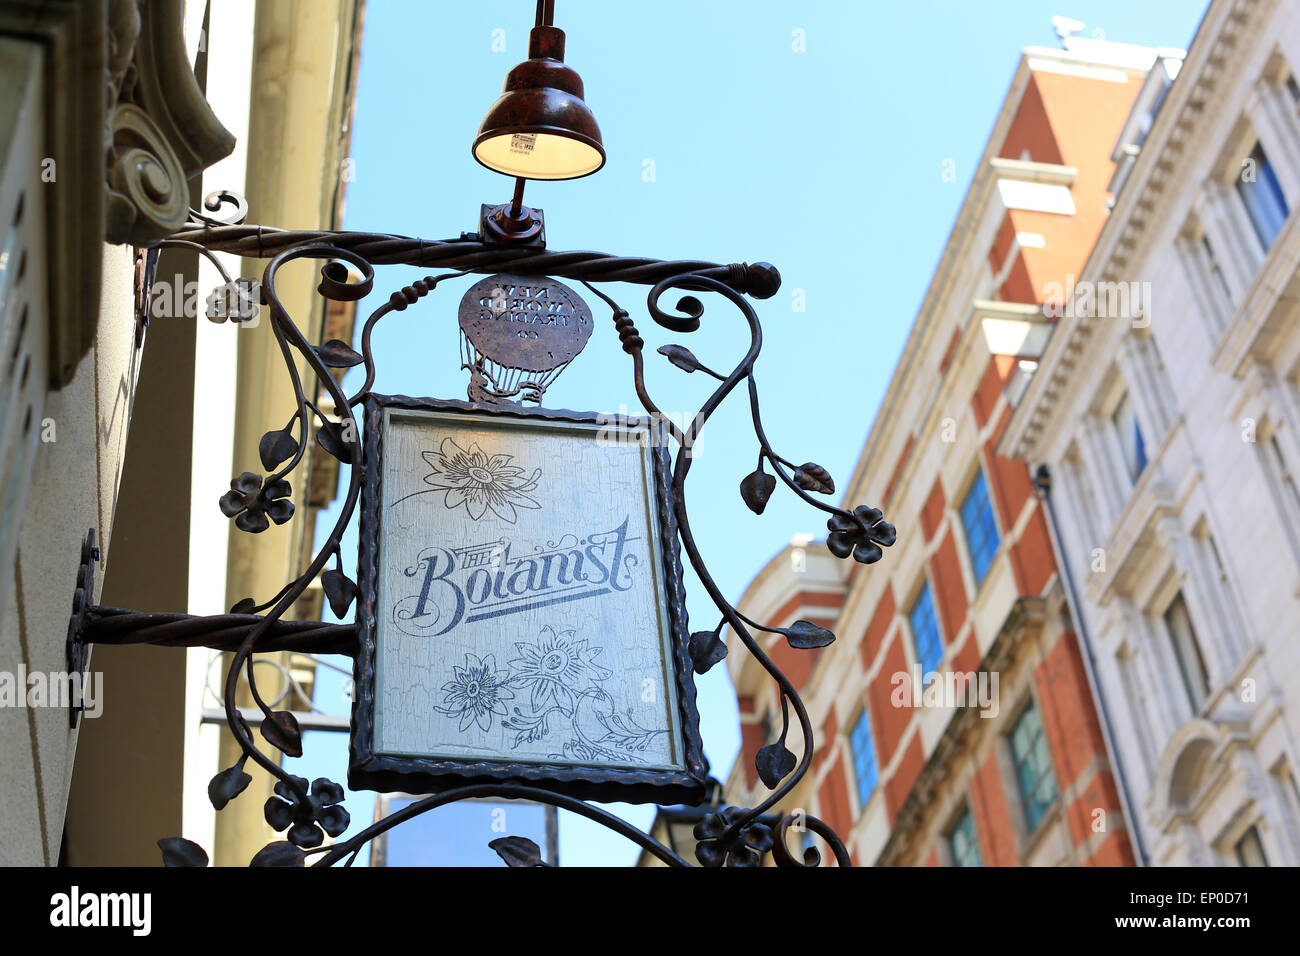 The Botanist, Birmingham - restaurant and bar signage Stock Photo